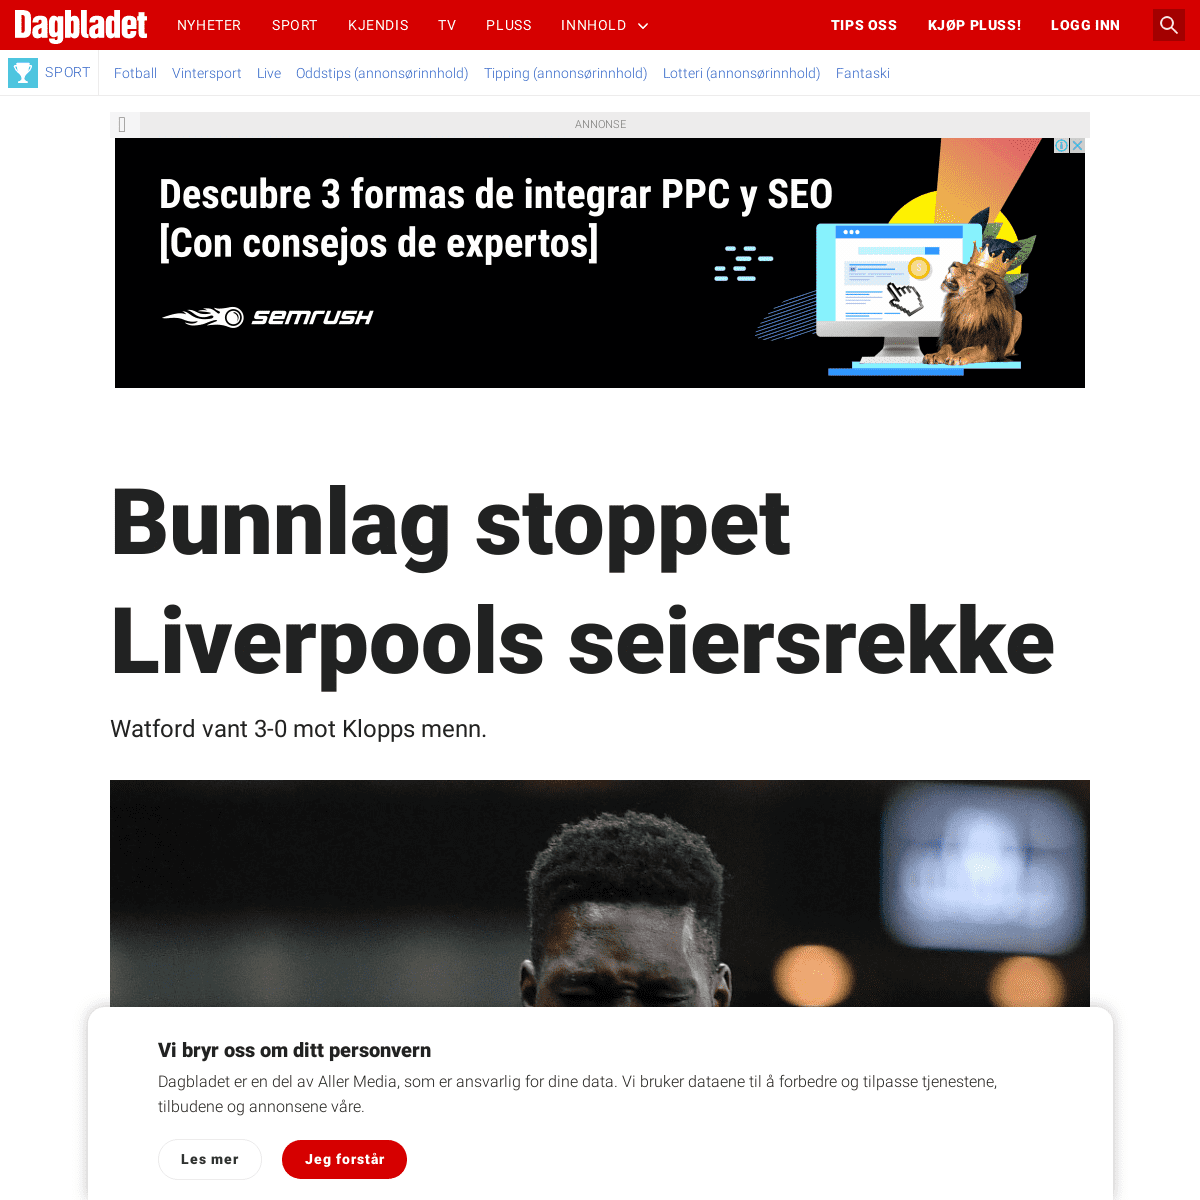 A complete backup of www.dagbladet.no/sport/bunnlag-stoppet-liverpools-seiersrekke/72196748